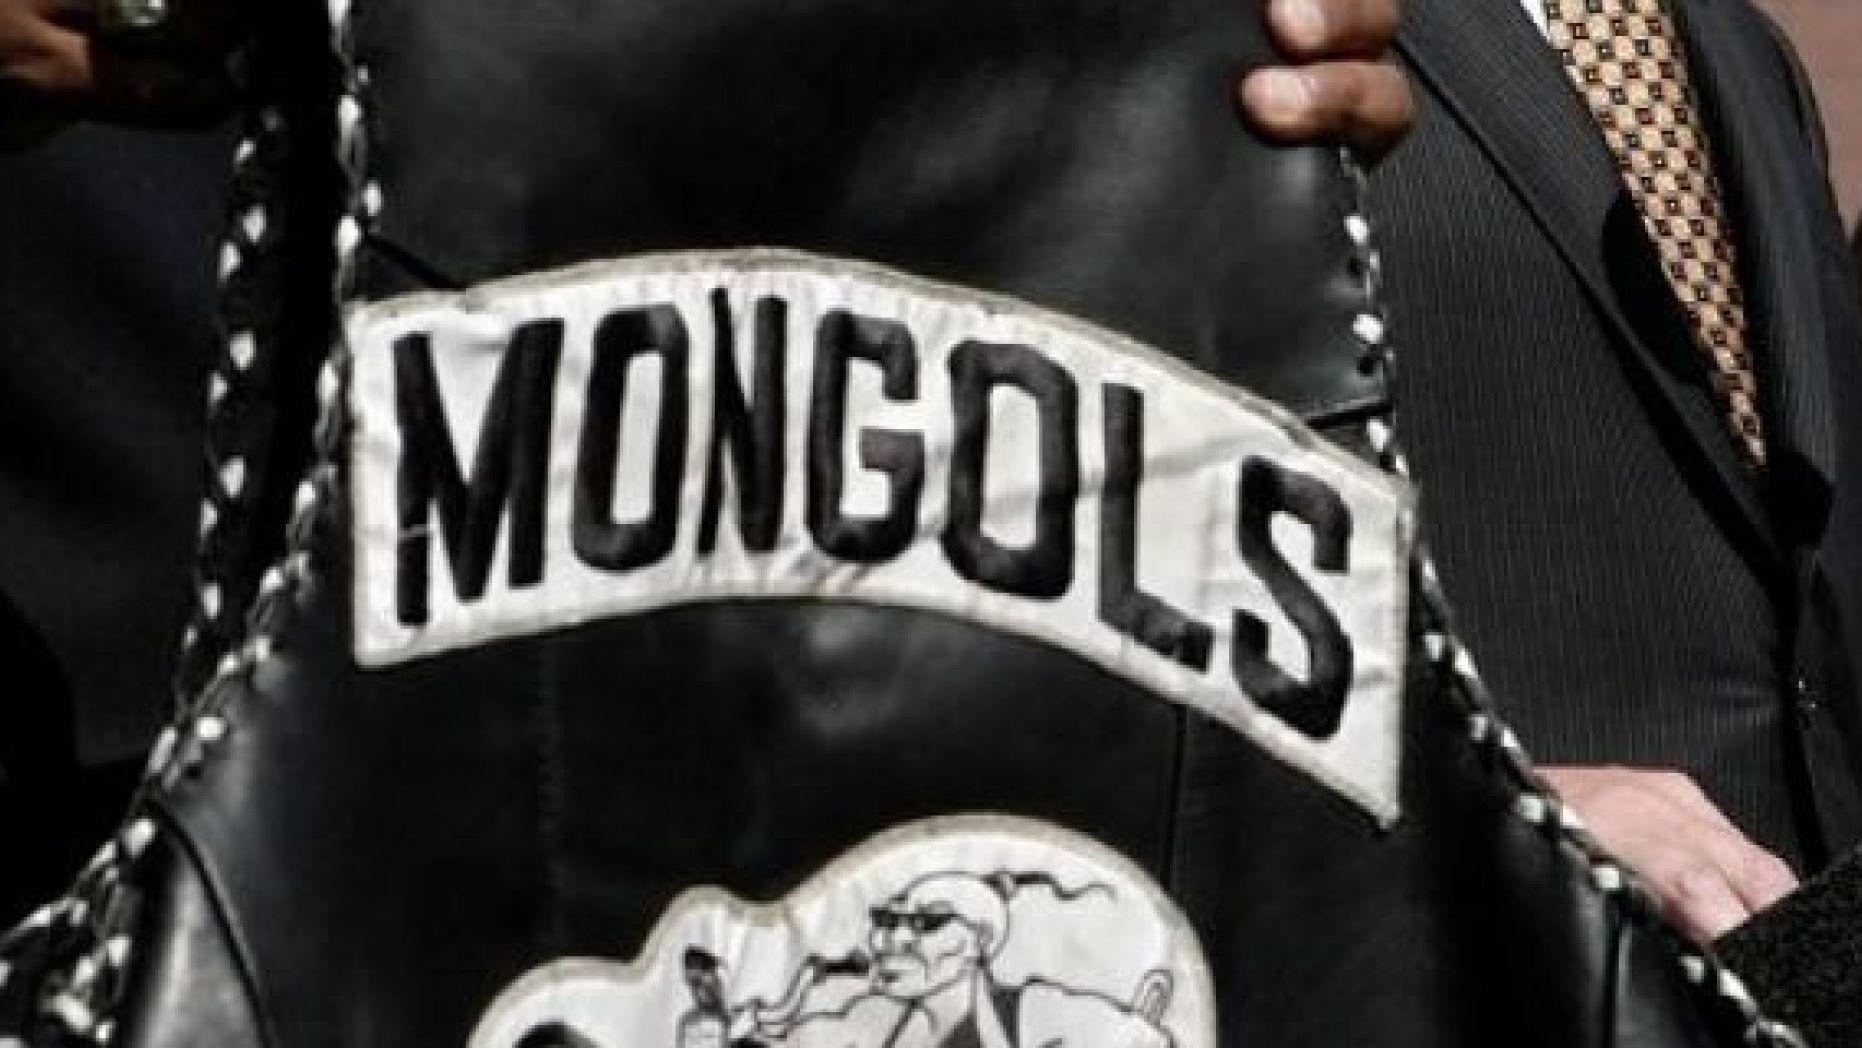 Lose Logo - Mongols motorcycle gang to lose trademarked logo, jury decides | Fox ...